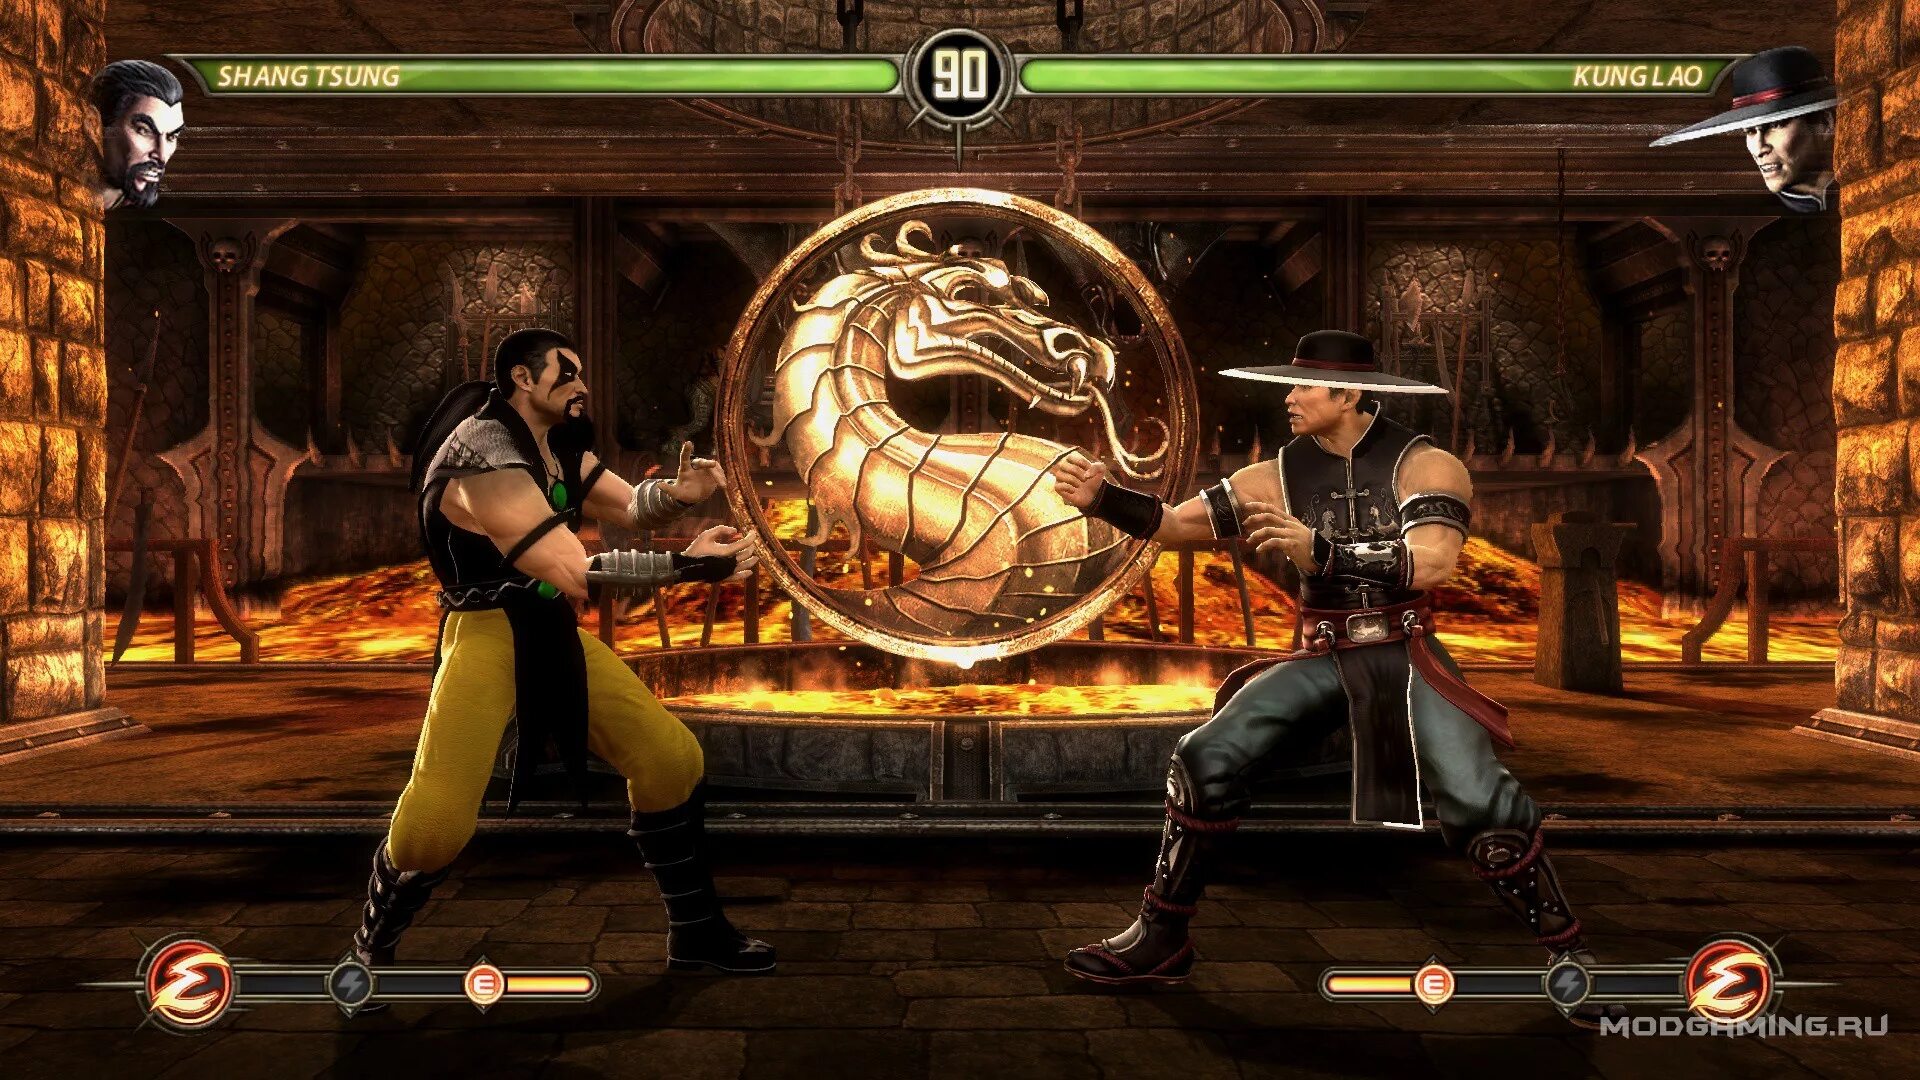 Шанг Цунг мортал комбат 3. Игра мортал комбат игра мортал комбат. Mortal Mortal Kombat 3 Shang Tsung. Mortal Kombat 2002. Игры мортал комбат джойстиком